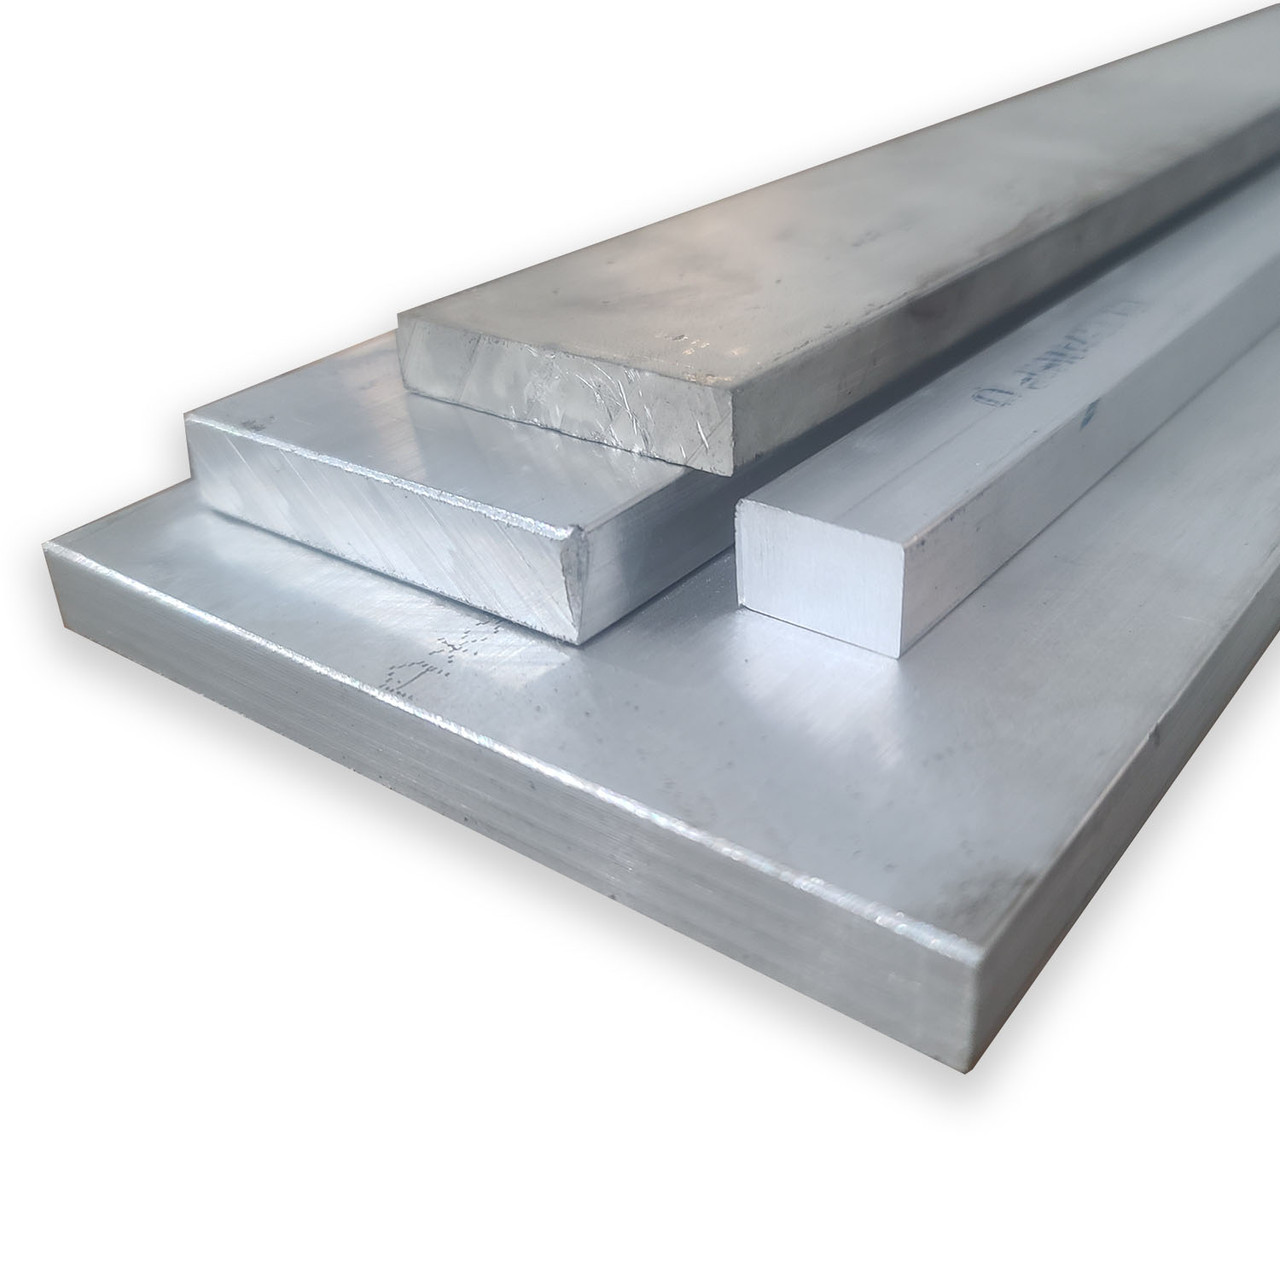 0.500" x 0.625" x 72", 6061-T6511 Aluminum Flat Bar